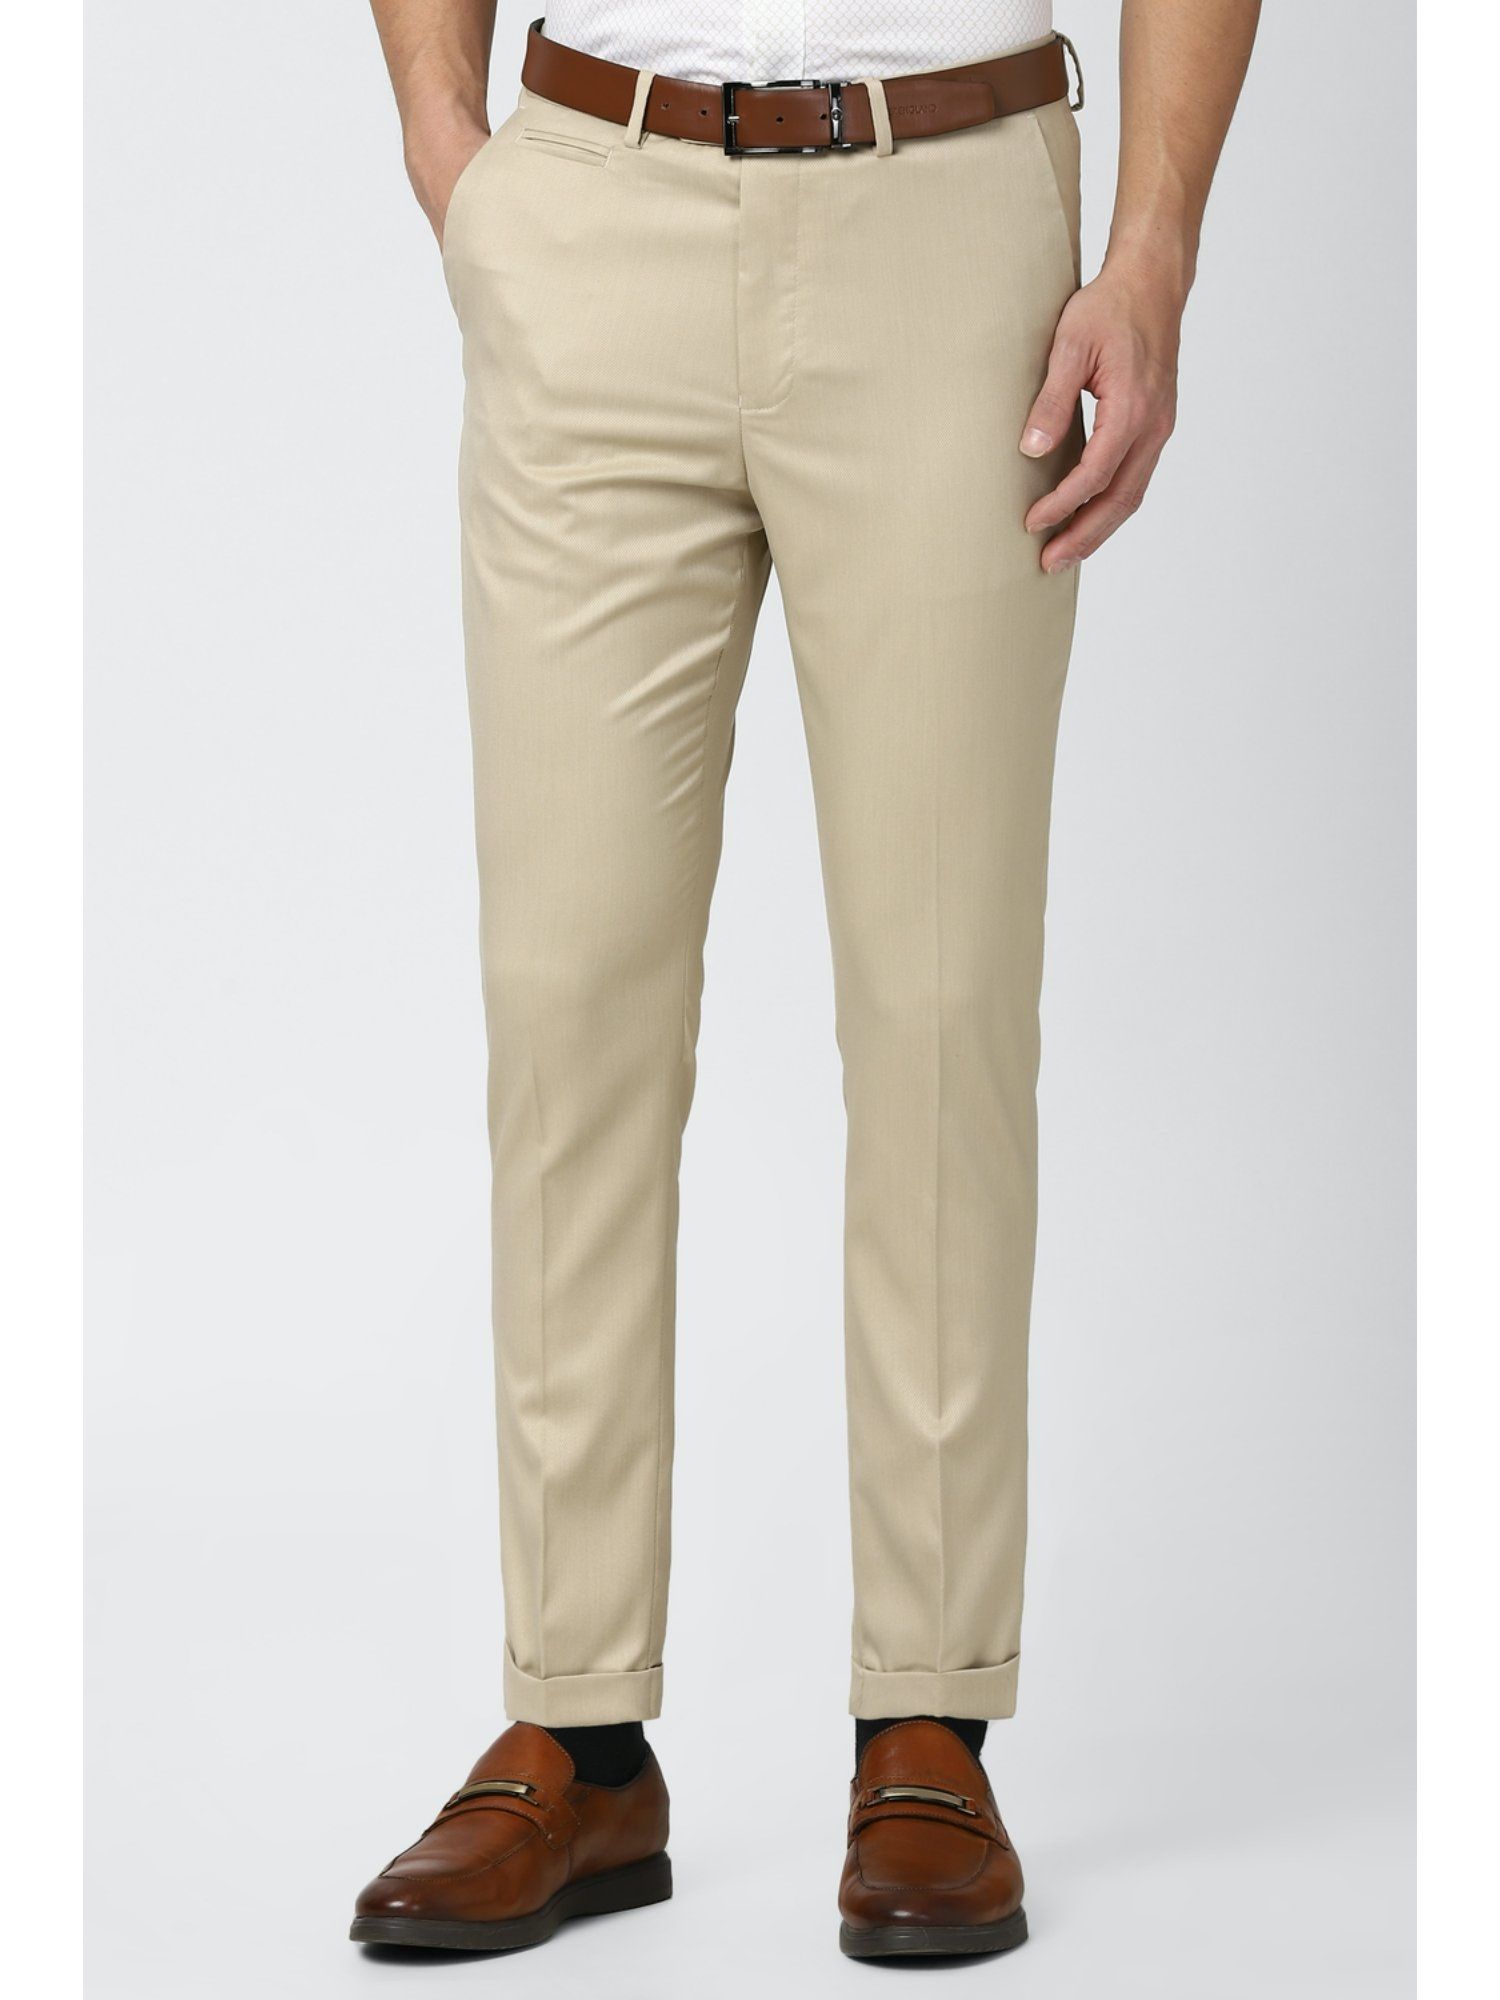 Shop Trousers Online | Max UAE